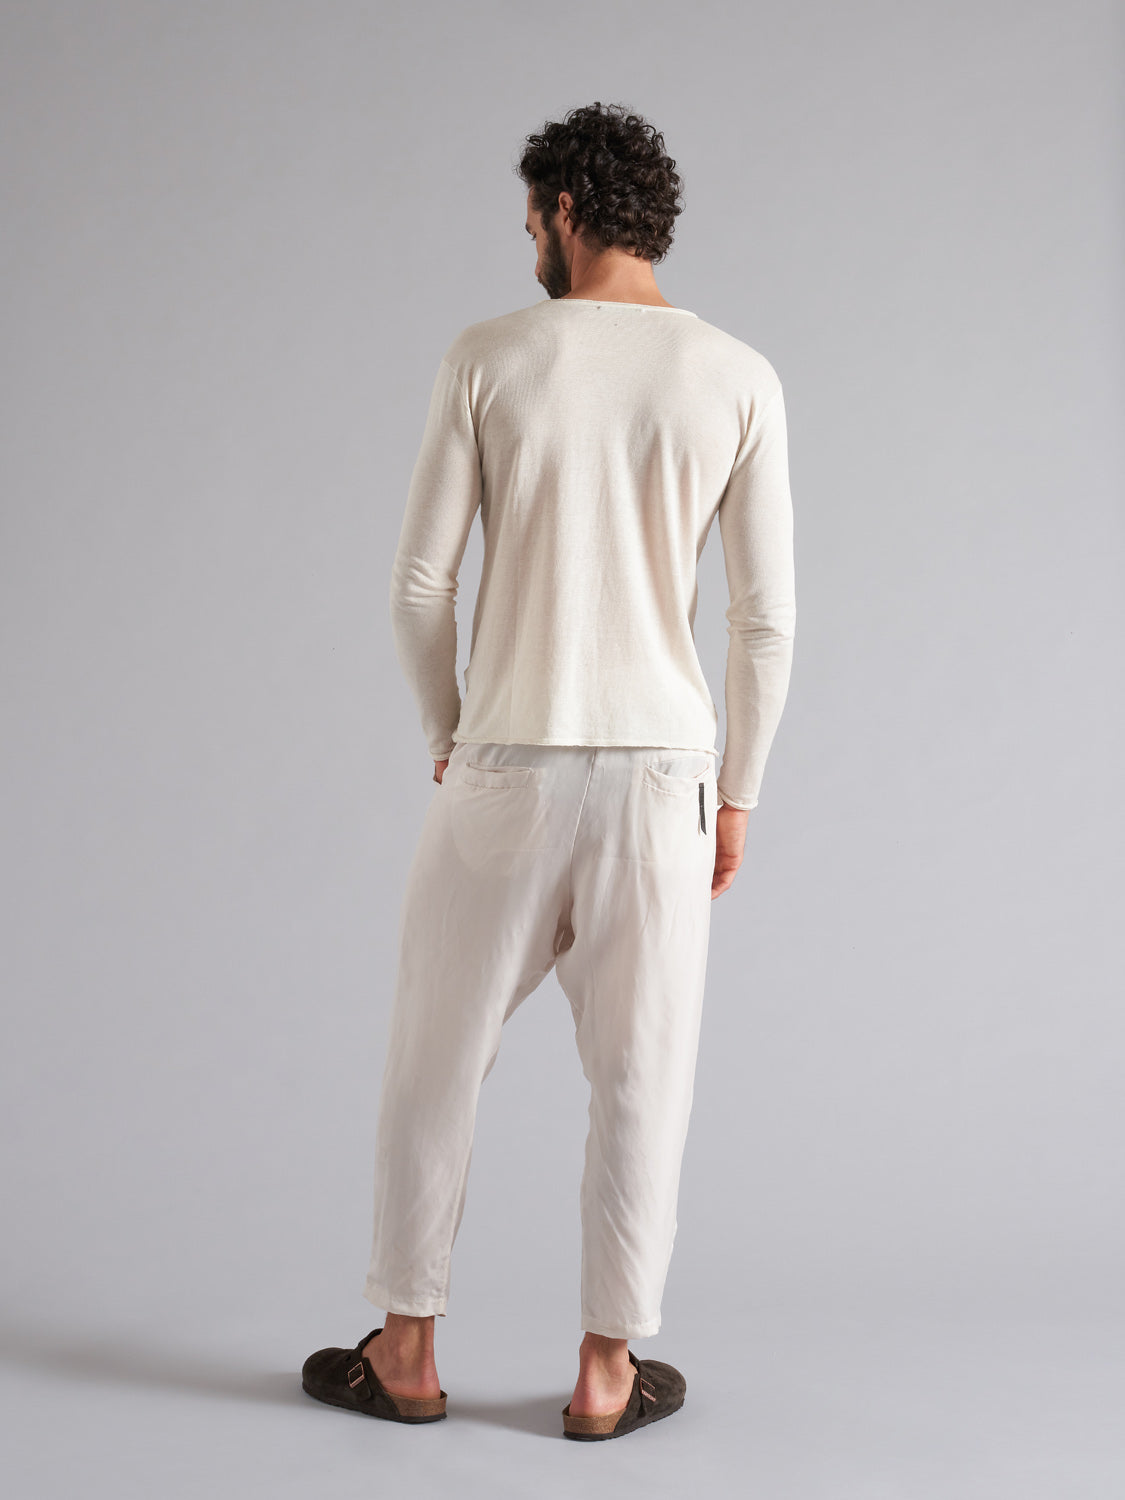 Pantalone in cupro uomo MPA020 W121